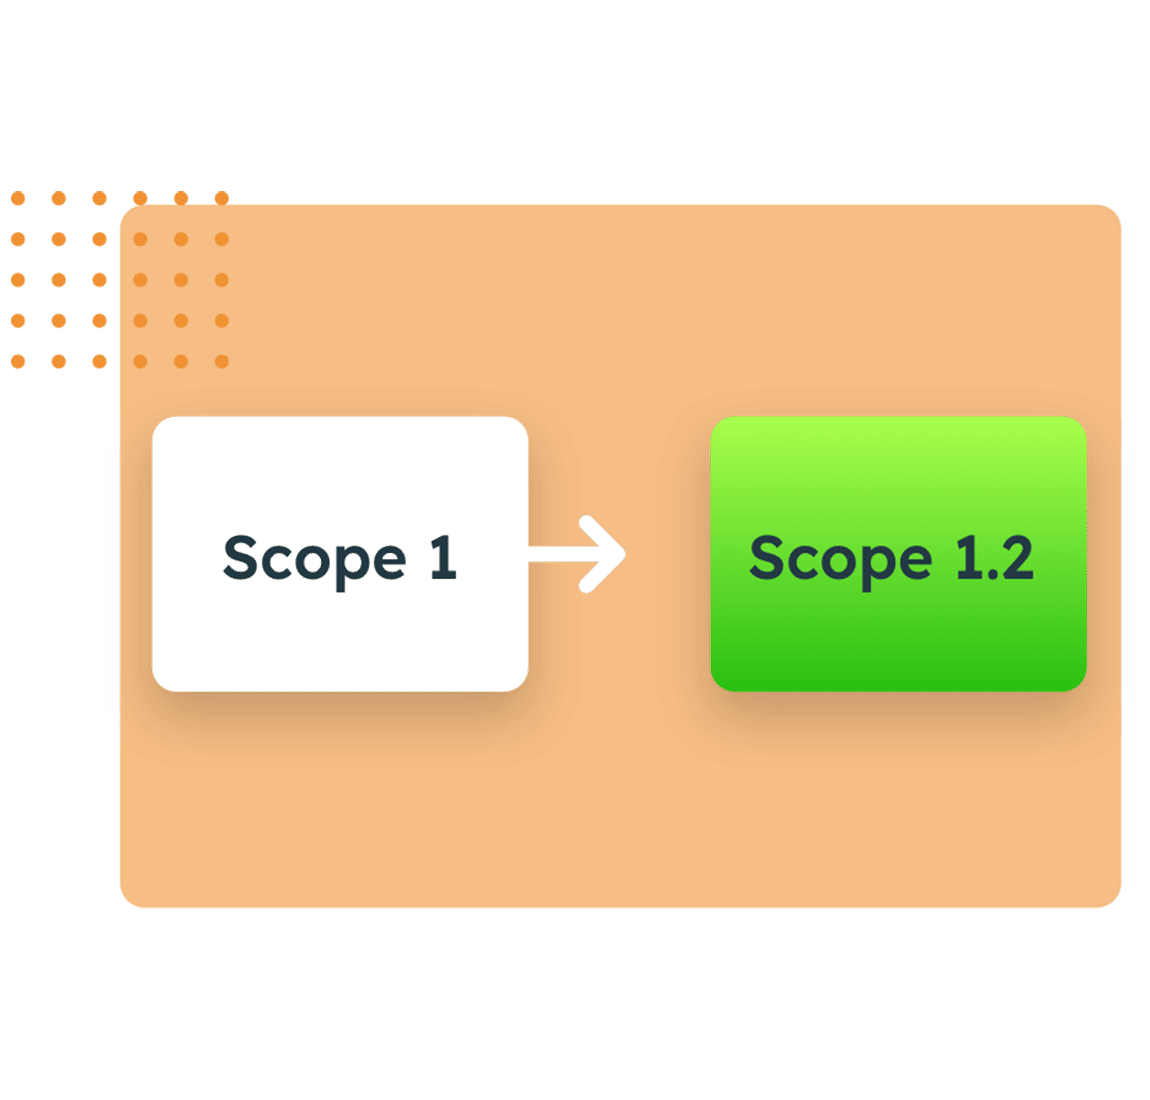 Scope 1 and Scope 1.2